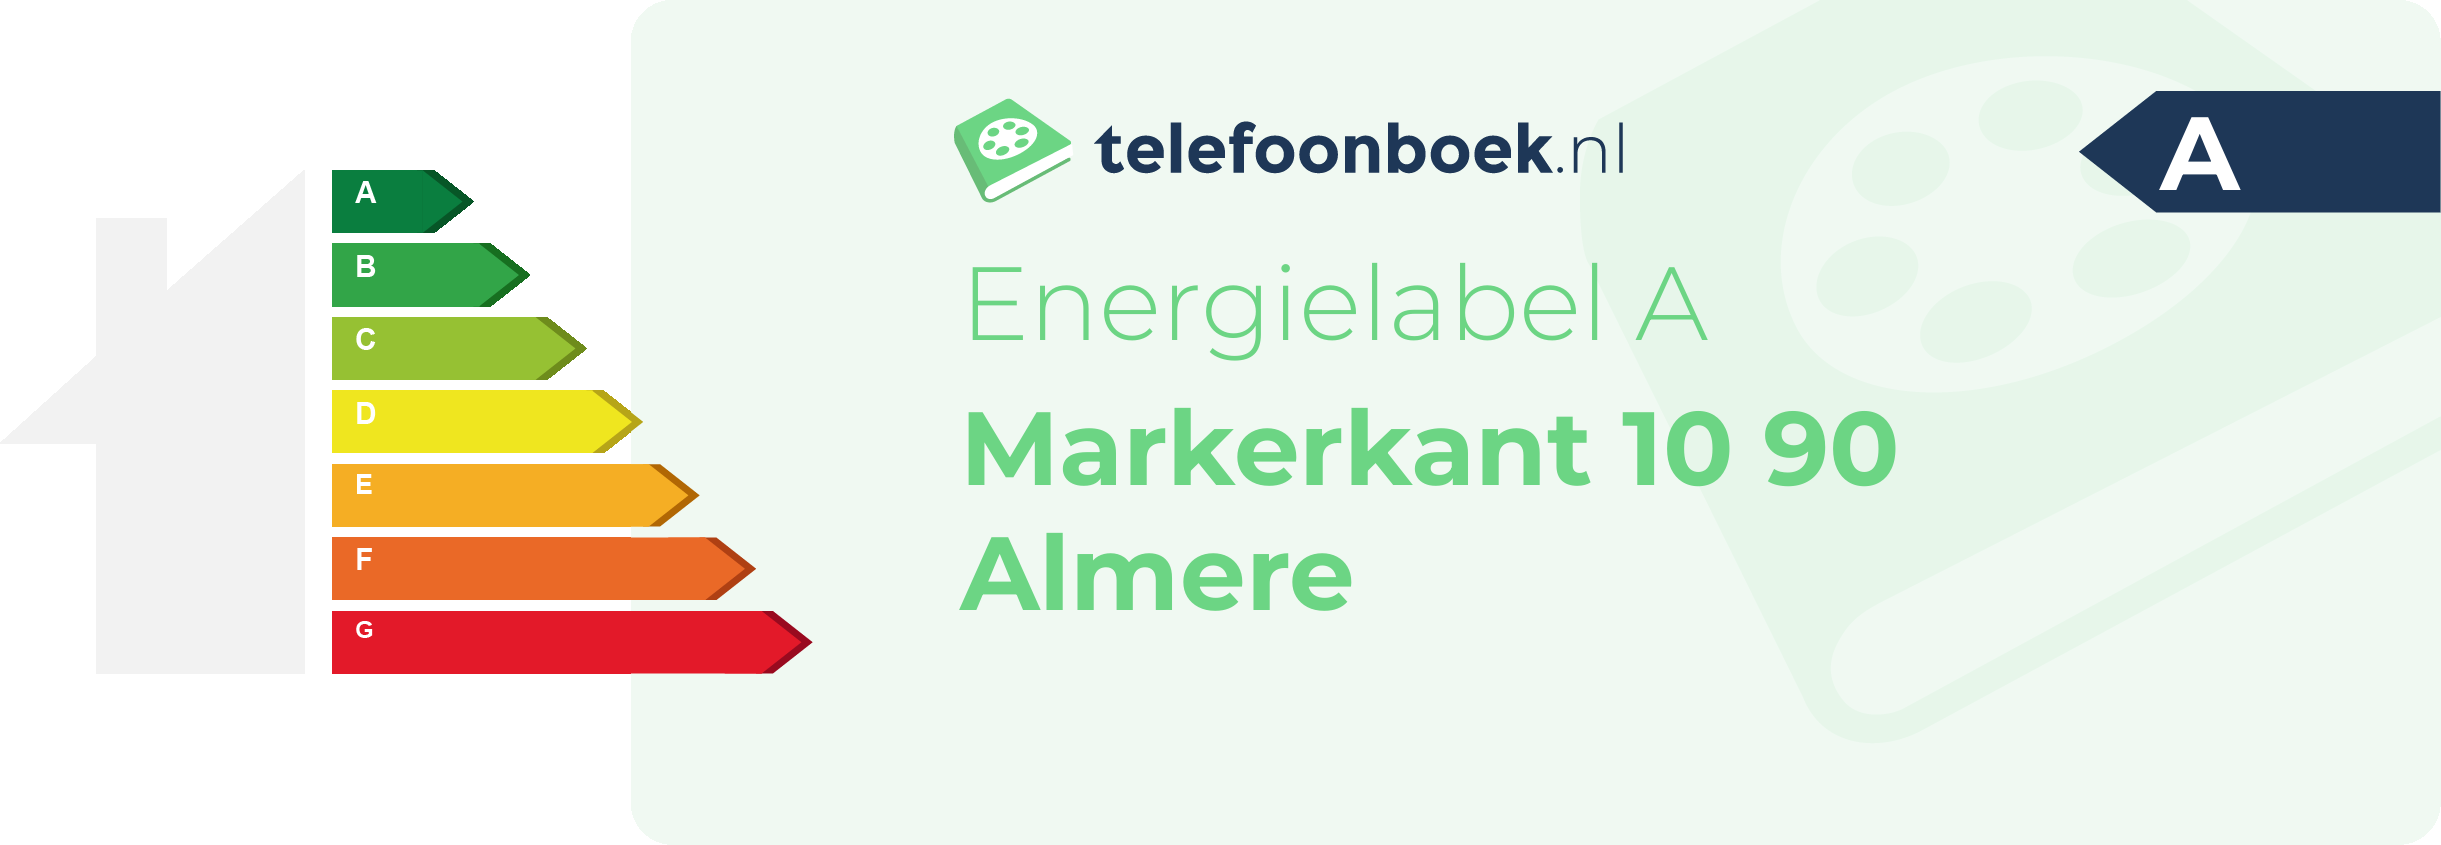 Energielabel Markerkant 10 90 Almere